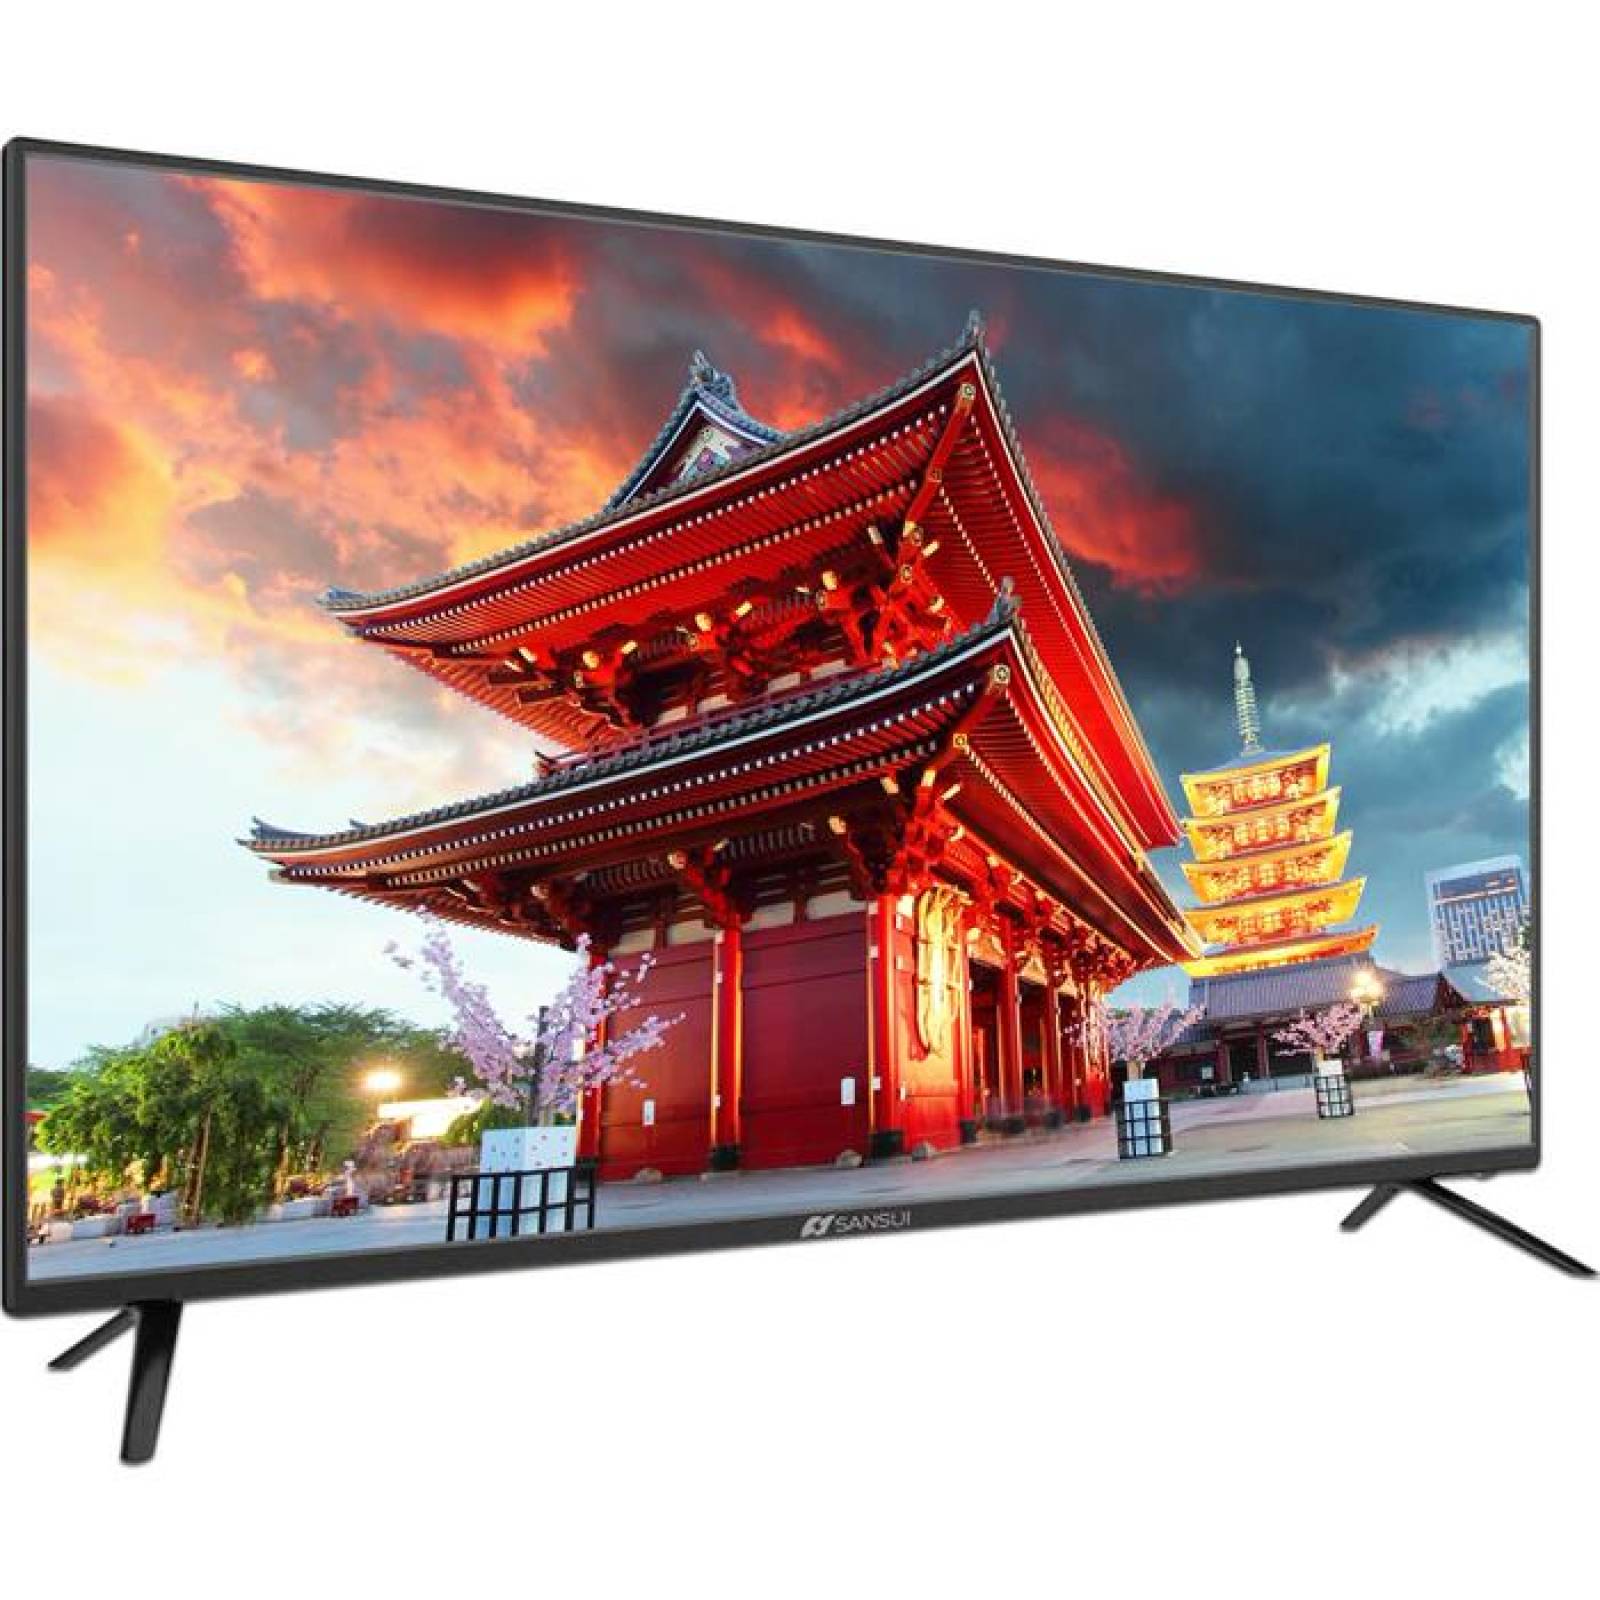 Pantalla Smart TV 40 pulgadas SANSUI DLED Full HD 2K HDMI Netflix  Certificado SMX40P28NF